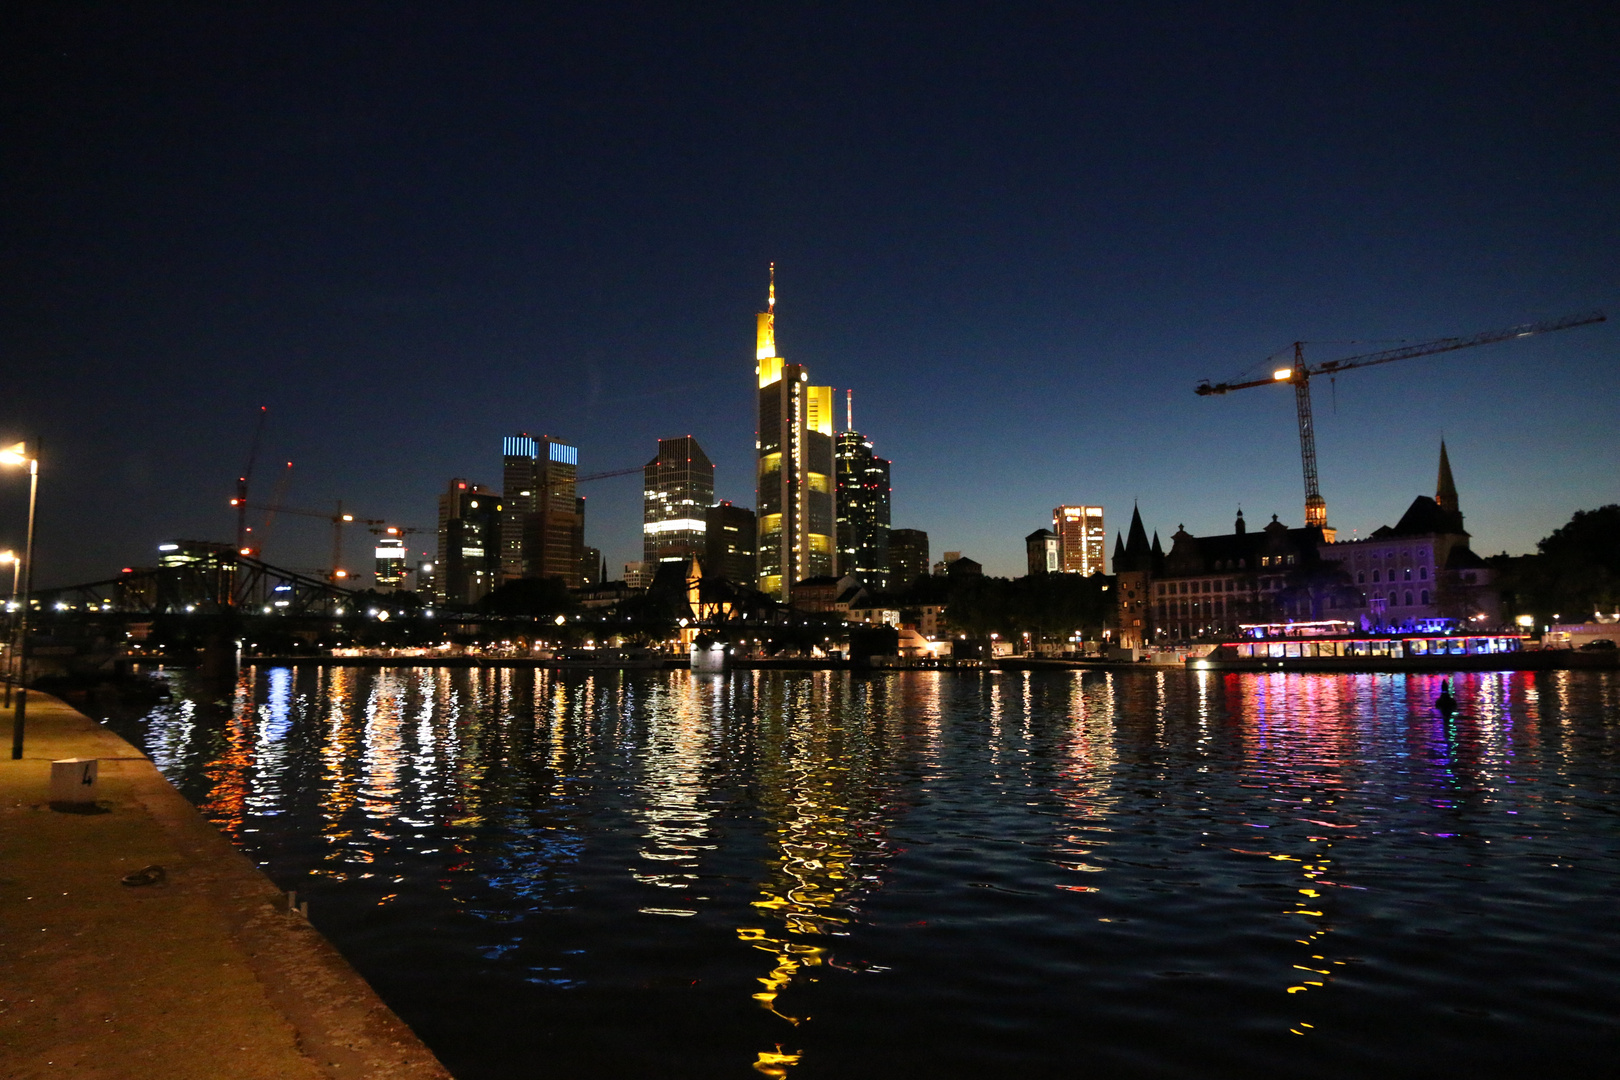 Frankfurt's Riverwalk